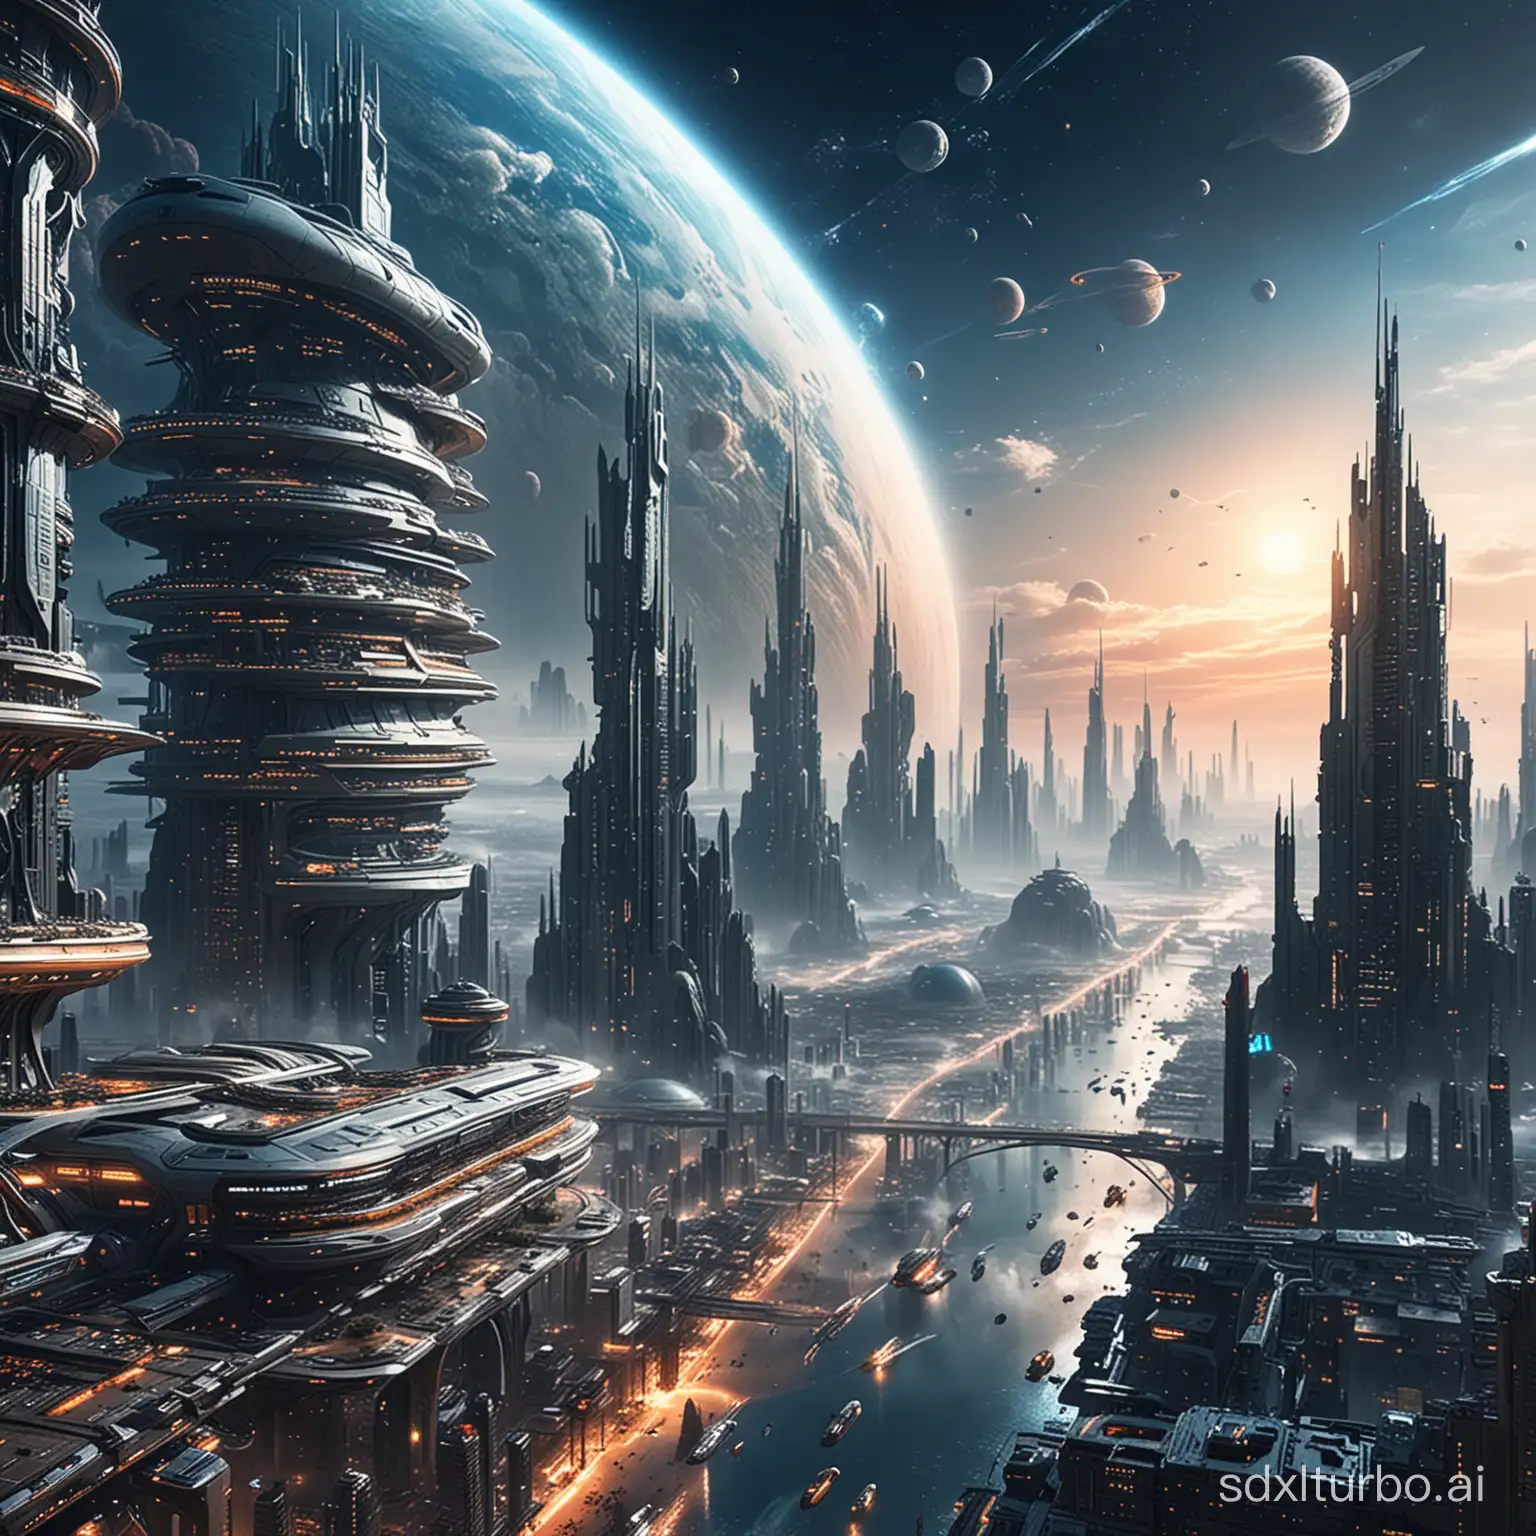 Futuristic-Space-Cityscape-with-SciFi-Architecture-and-Advanced-Technology